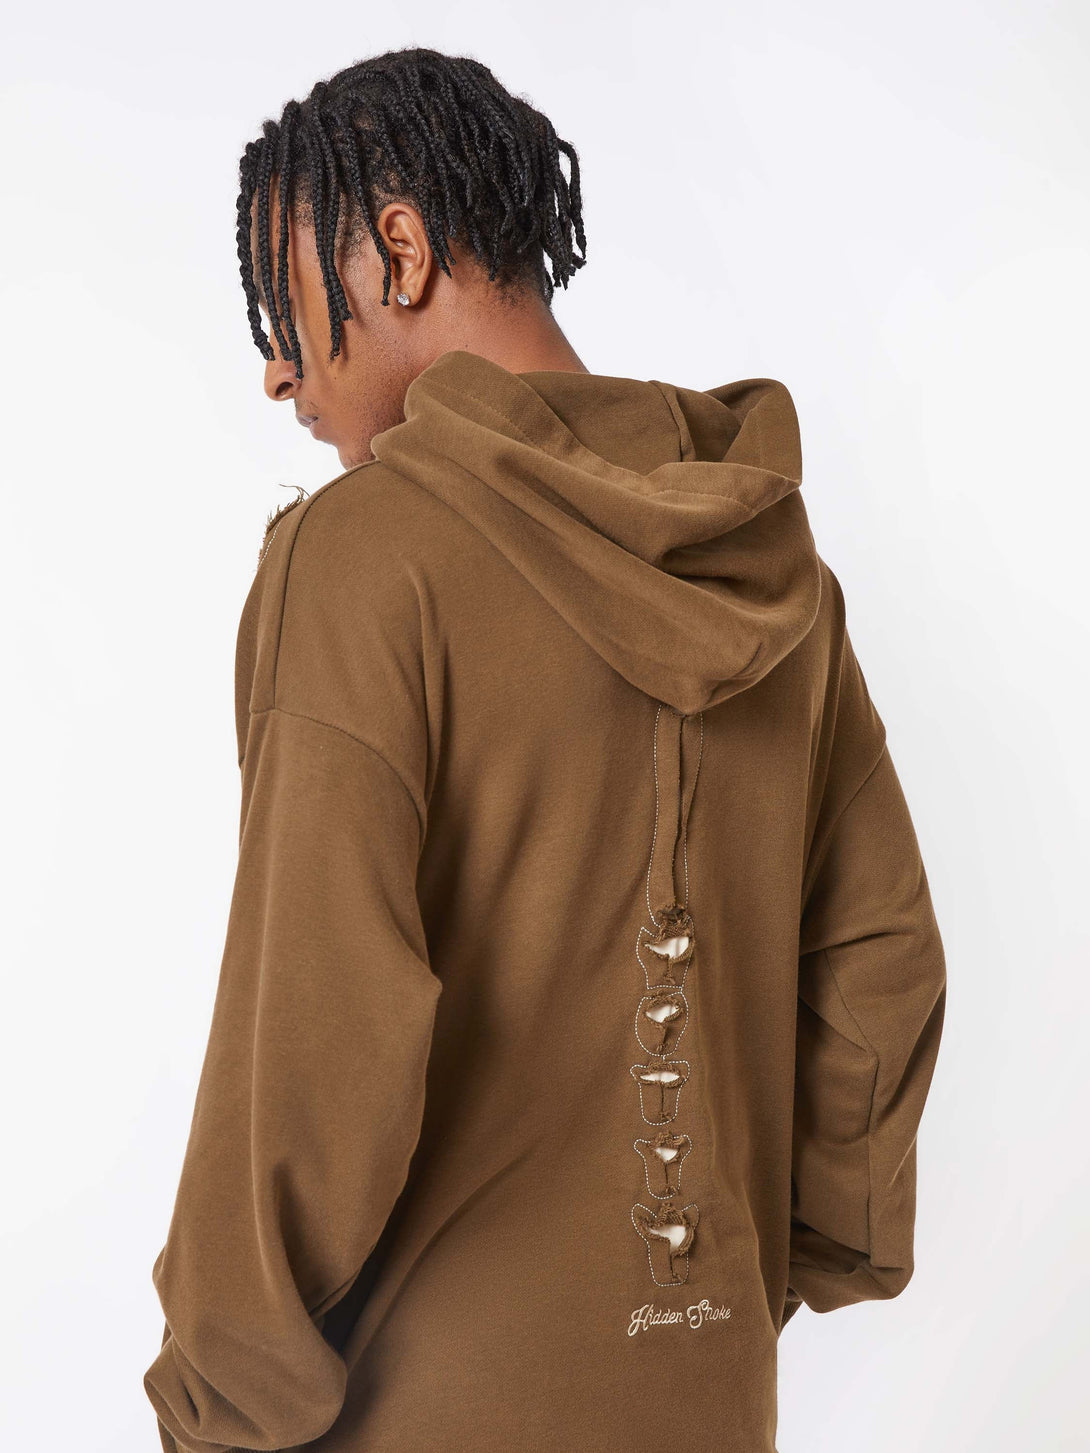 Majesda® - Washed And Aged Hooded Sweatshirt - 1674- Outfit Ideas - Streetwear Fashion - majesda.com